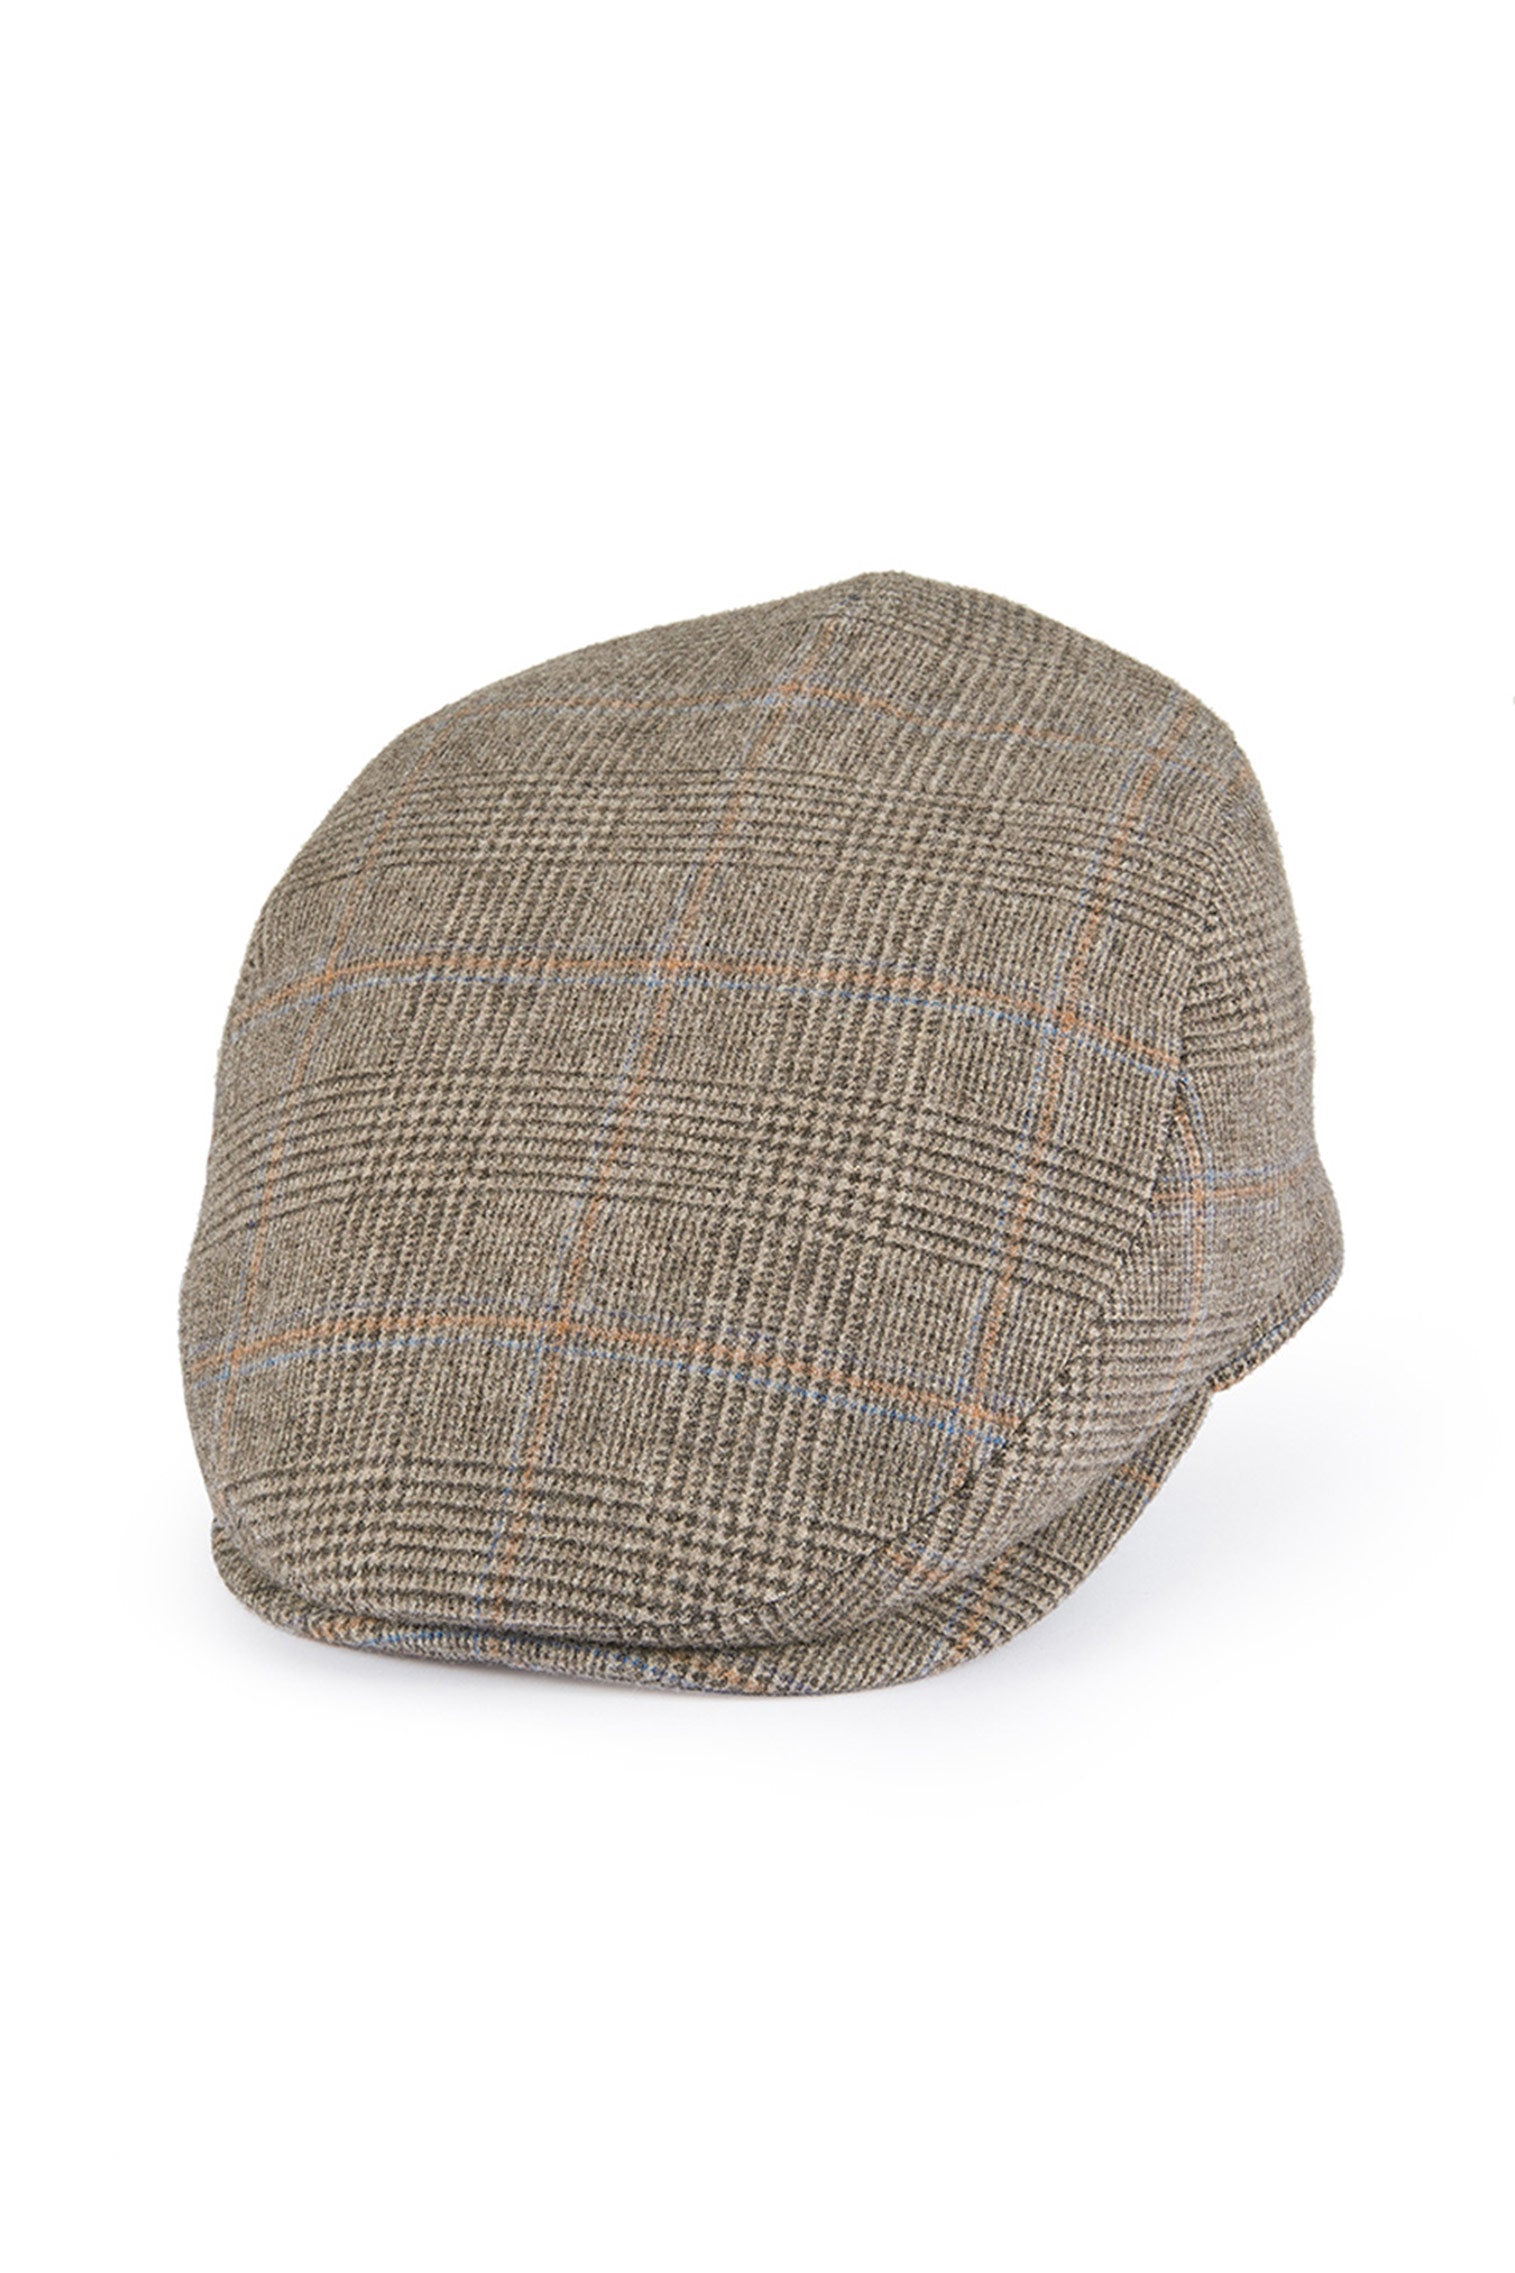 Escorial Wool Grosvenor Flat Cap - Hats for Oval Face Shapes - Lock & Co. Hatters London UK